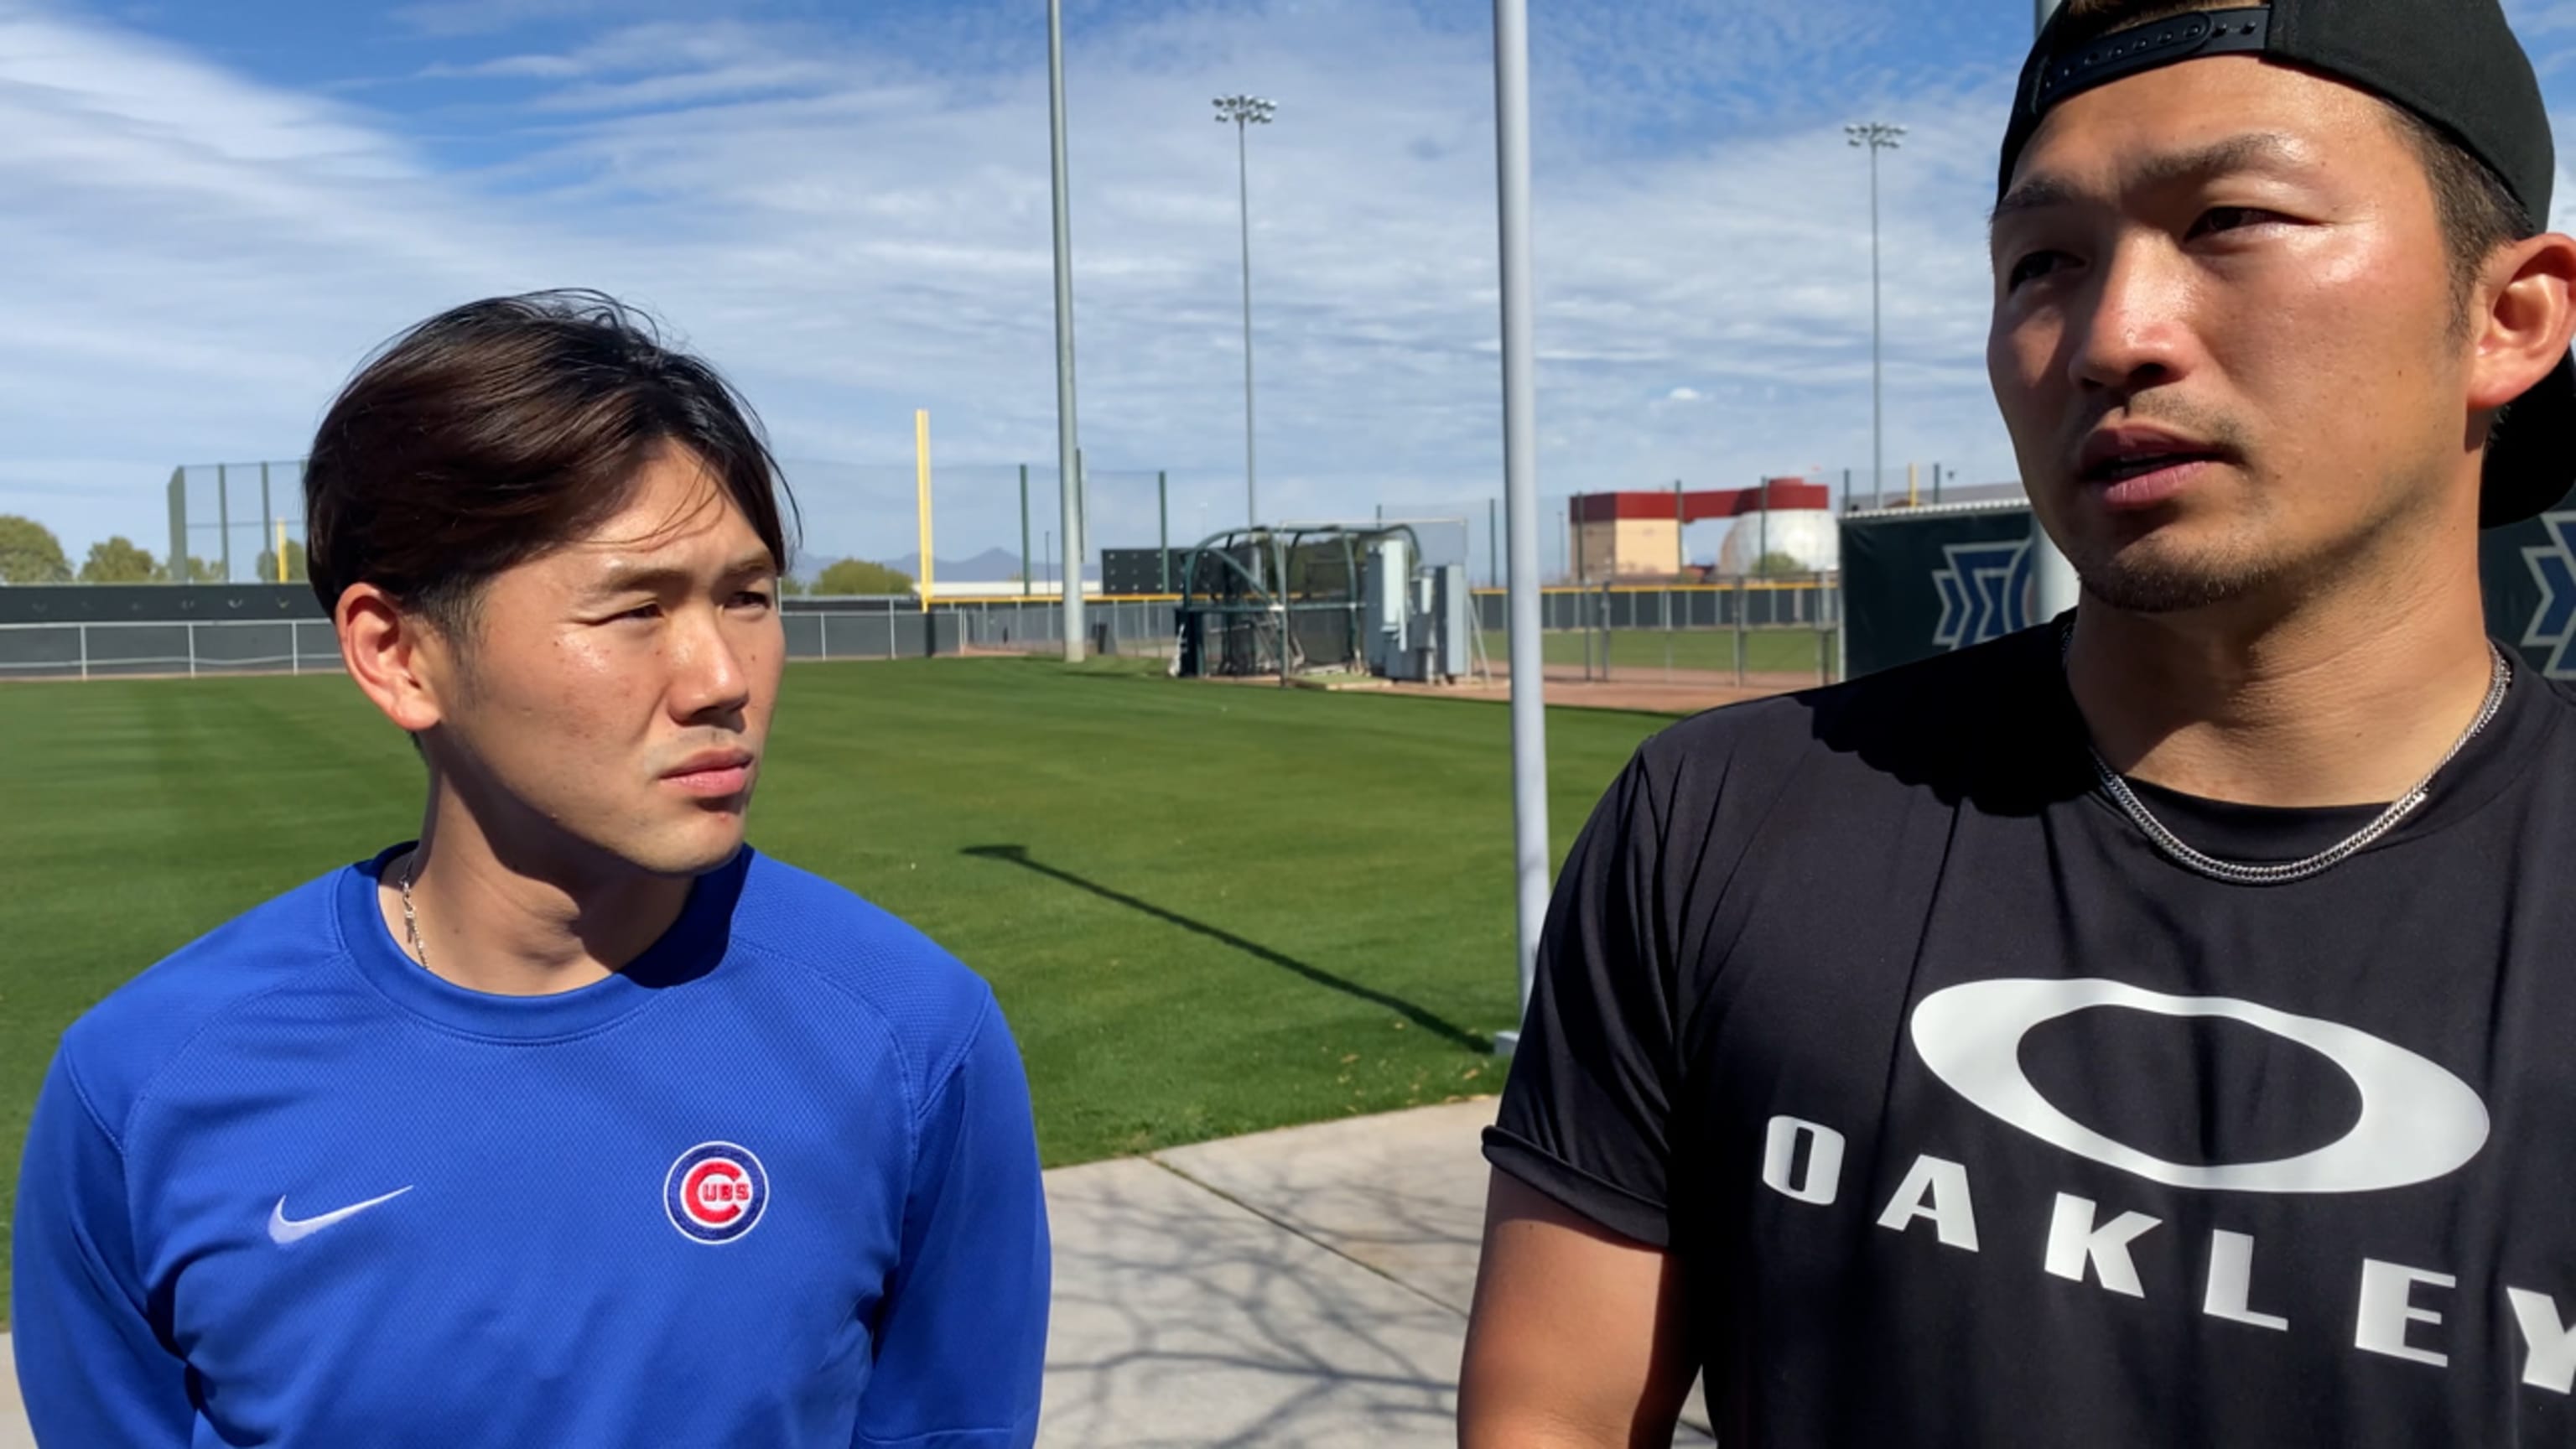 Seiya Suzuki withdraws from World Baseball Classic